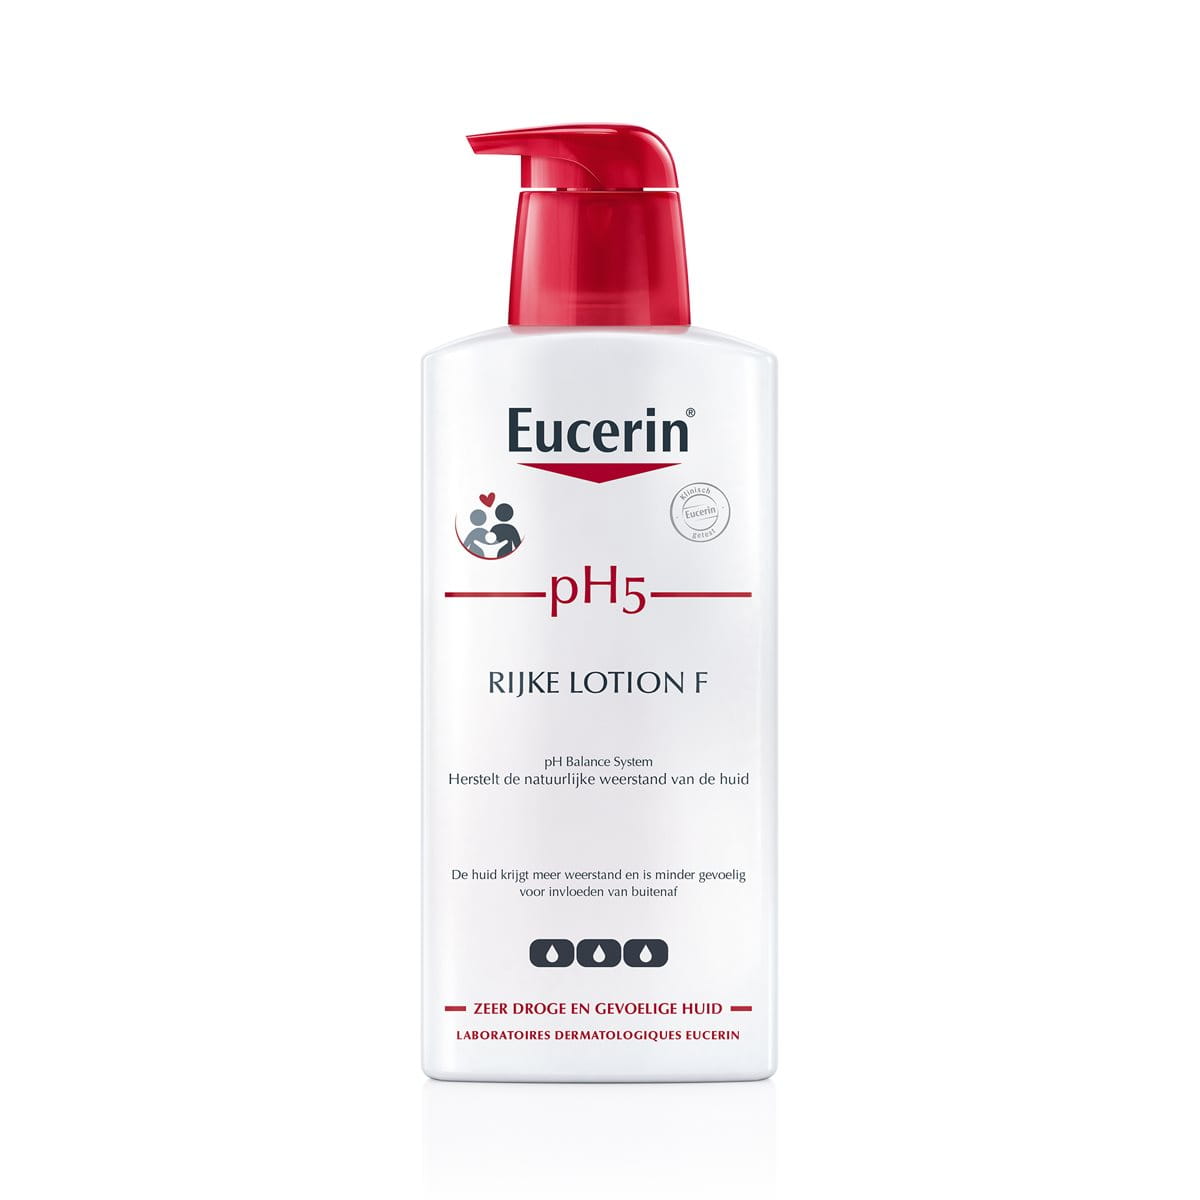 Eucerin pH5 Rijke Body Lotion F